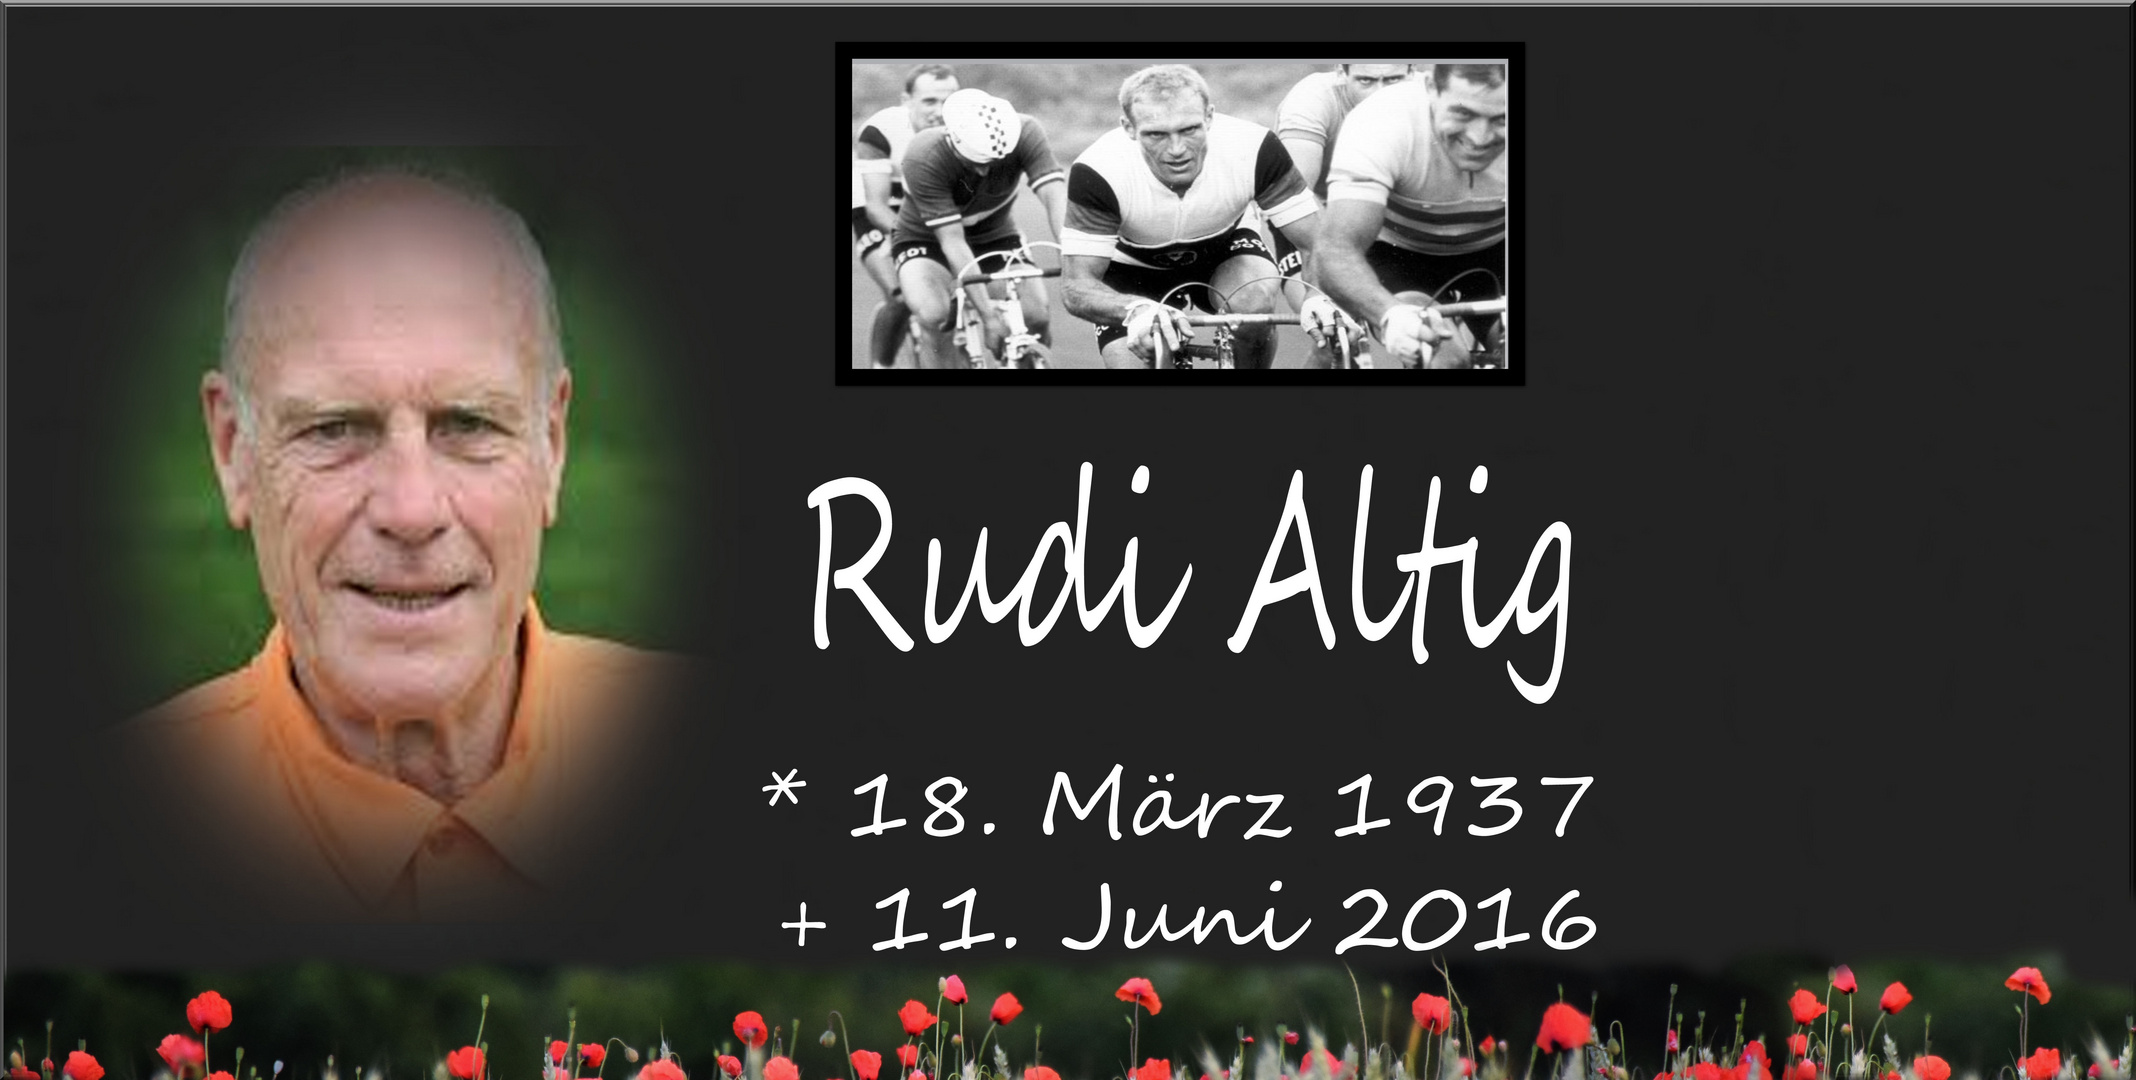 Rudi Altig